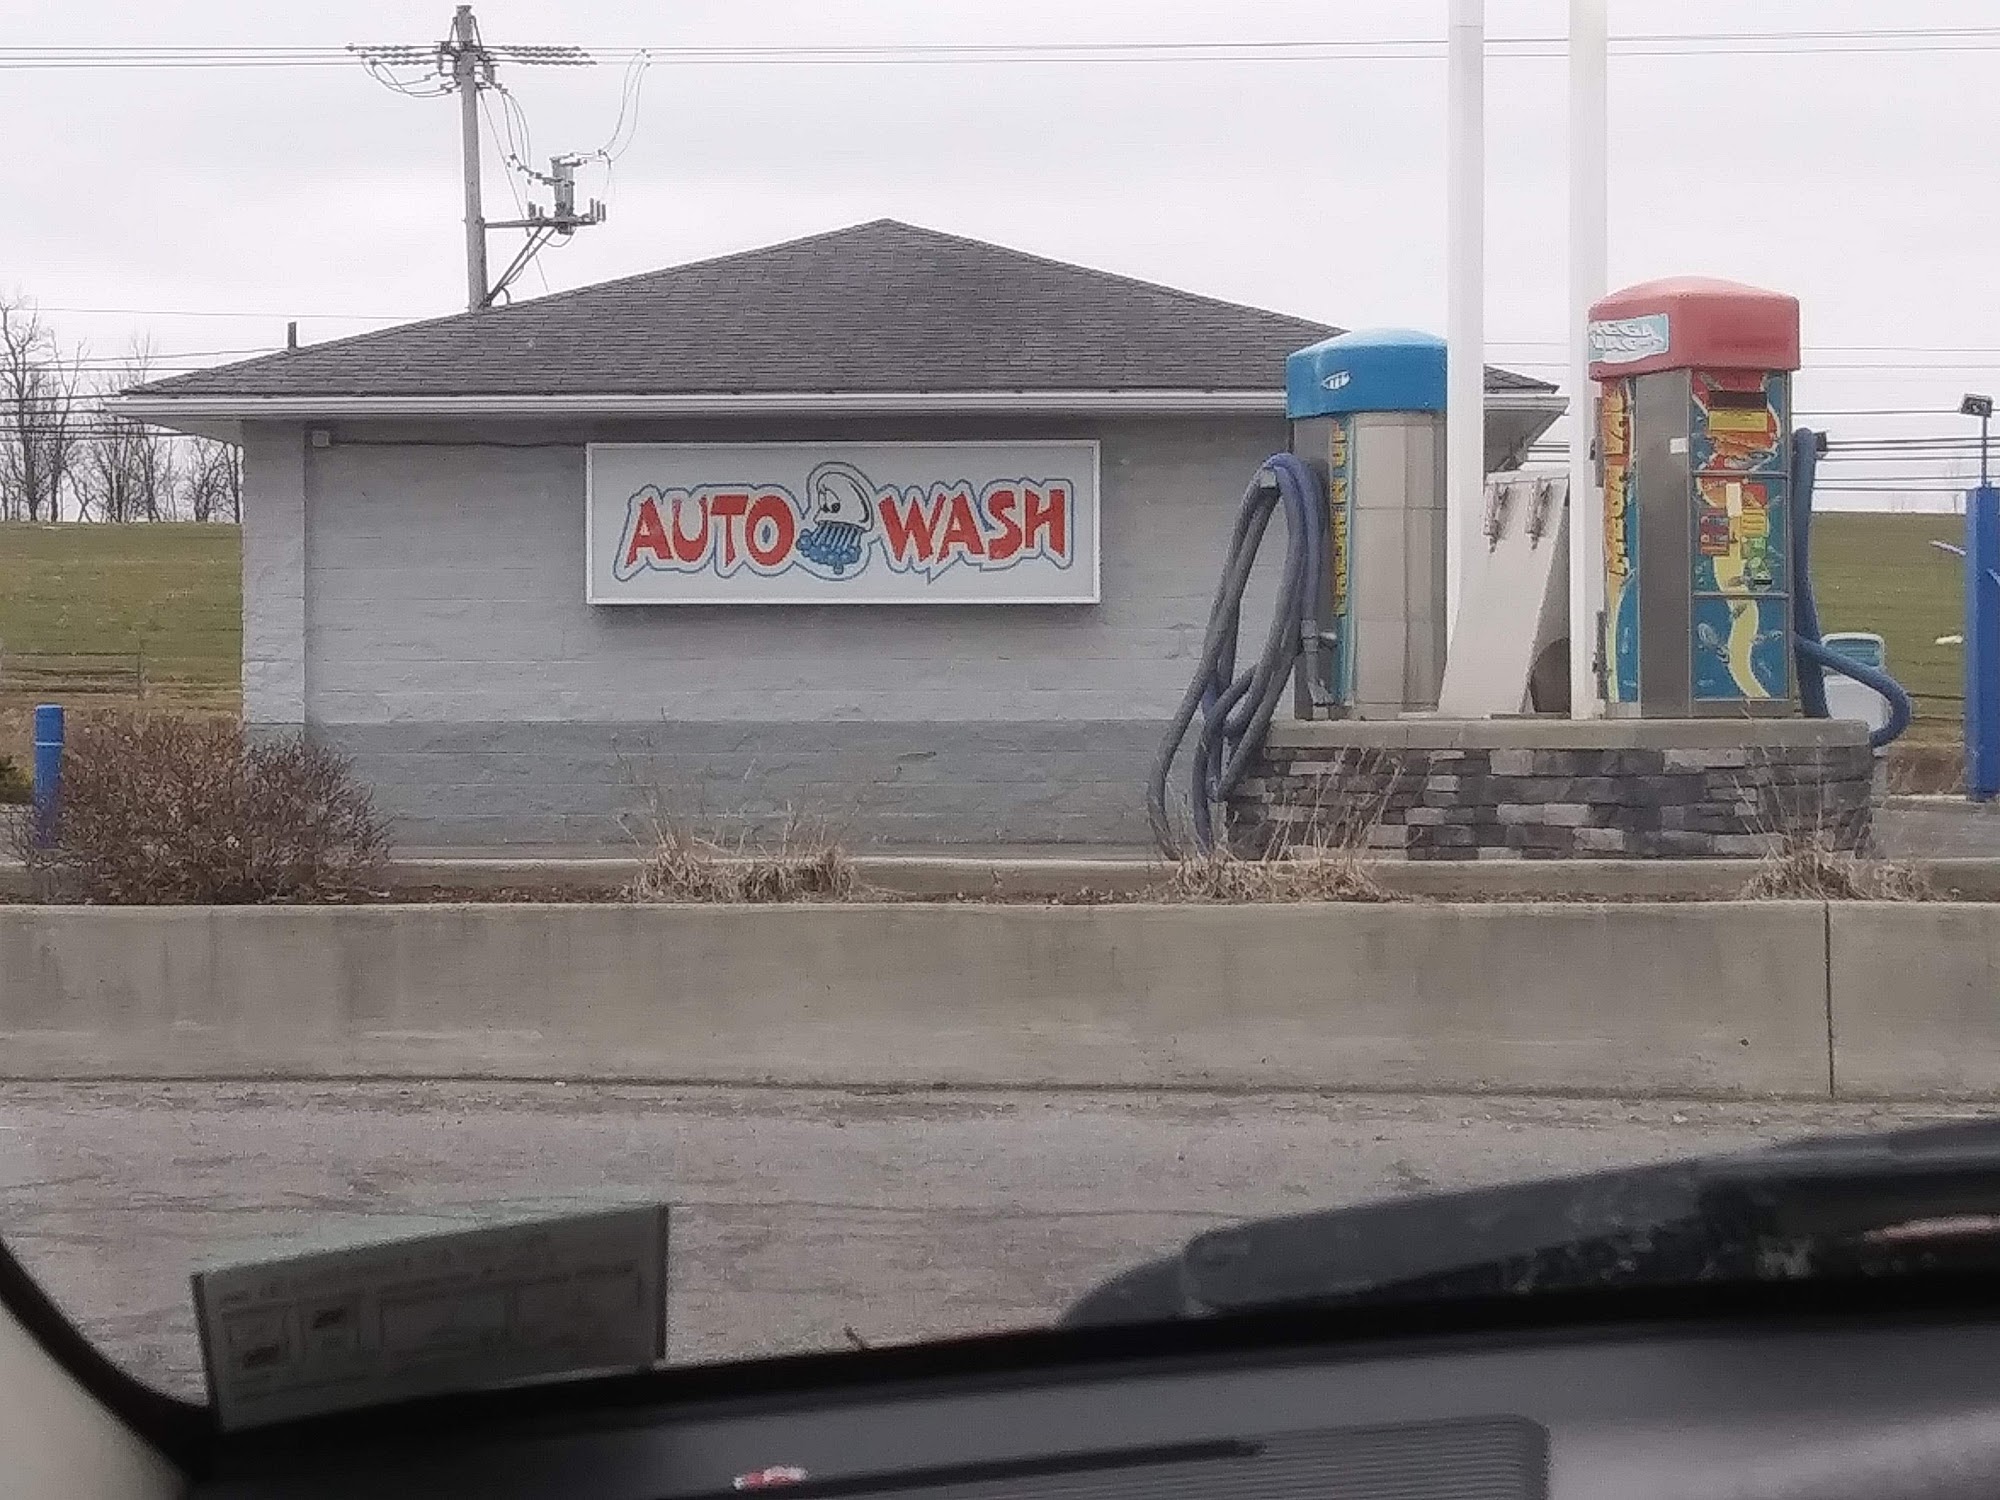 Quick'n Easy Auto wash